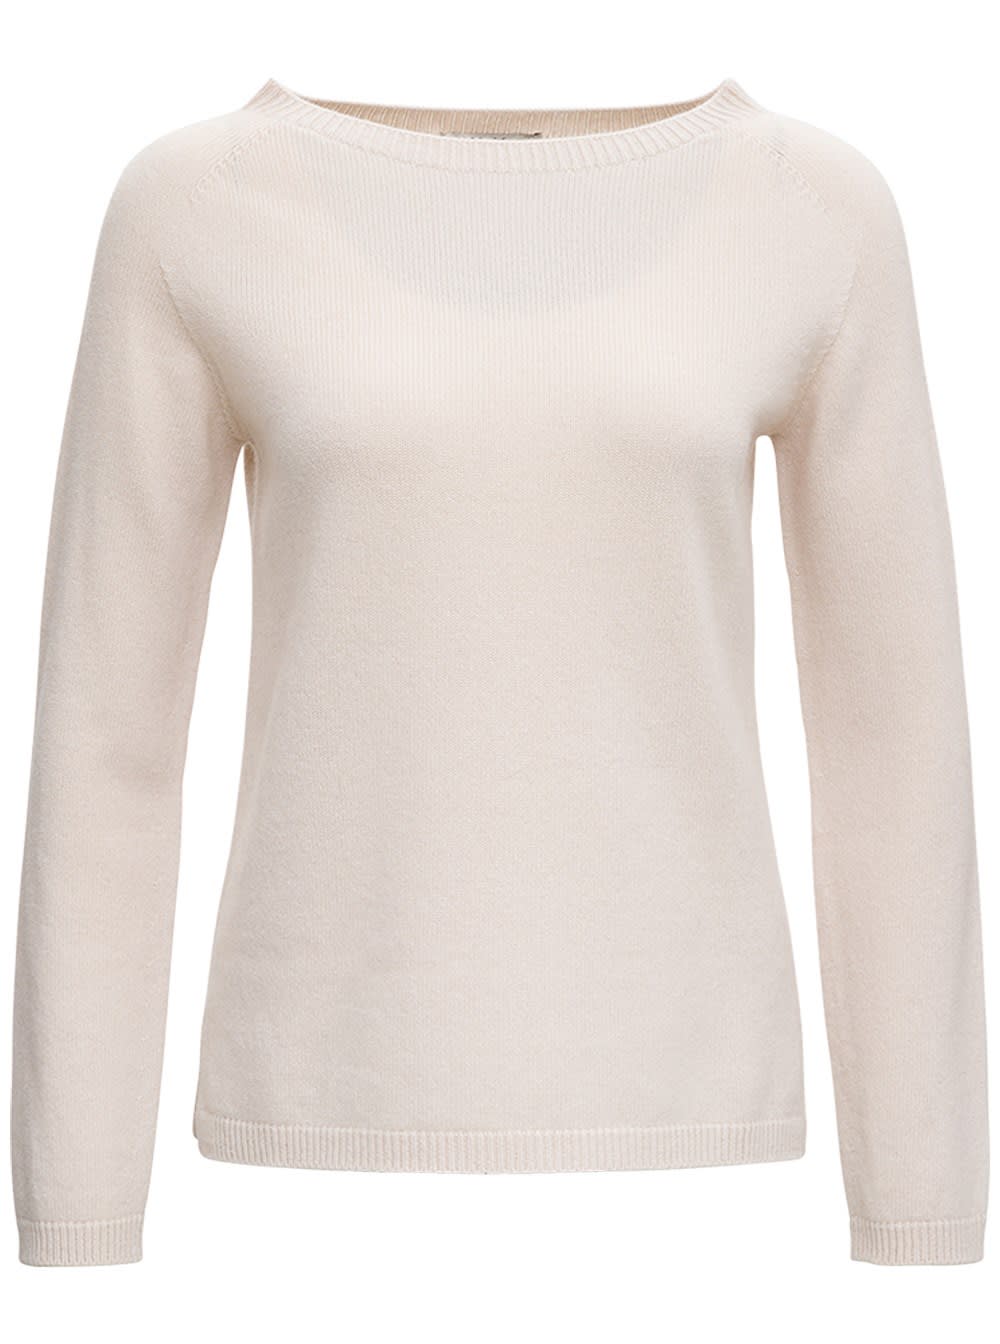 'S Max Mara Giose Ivory Colored Cashmere Sweater